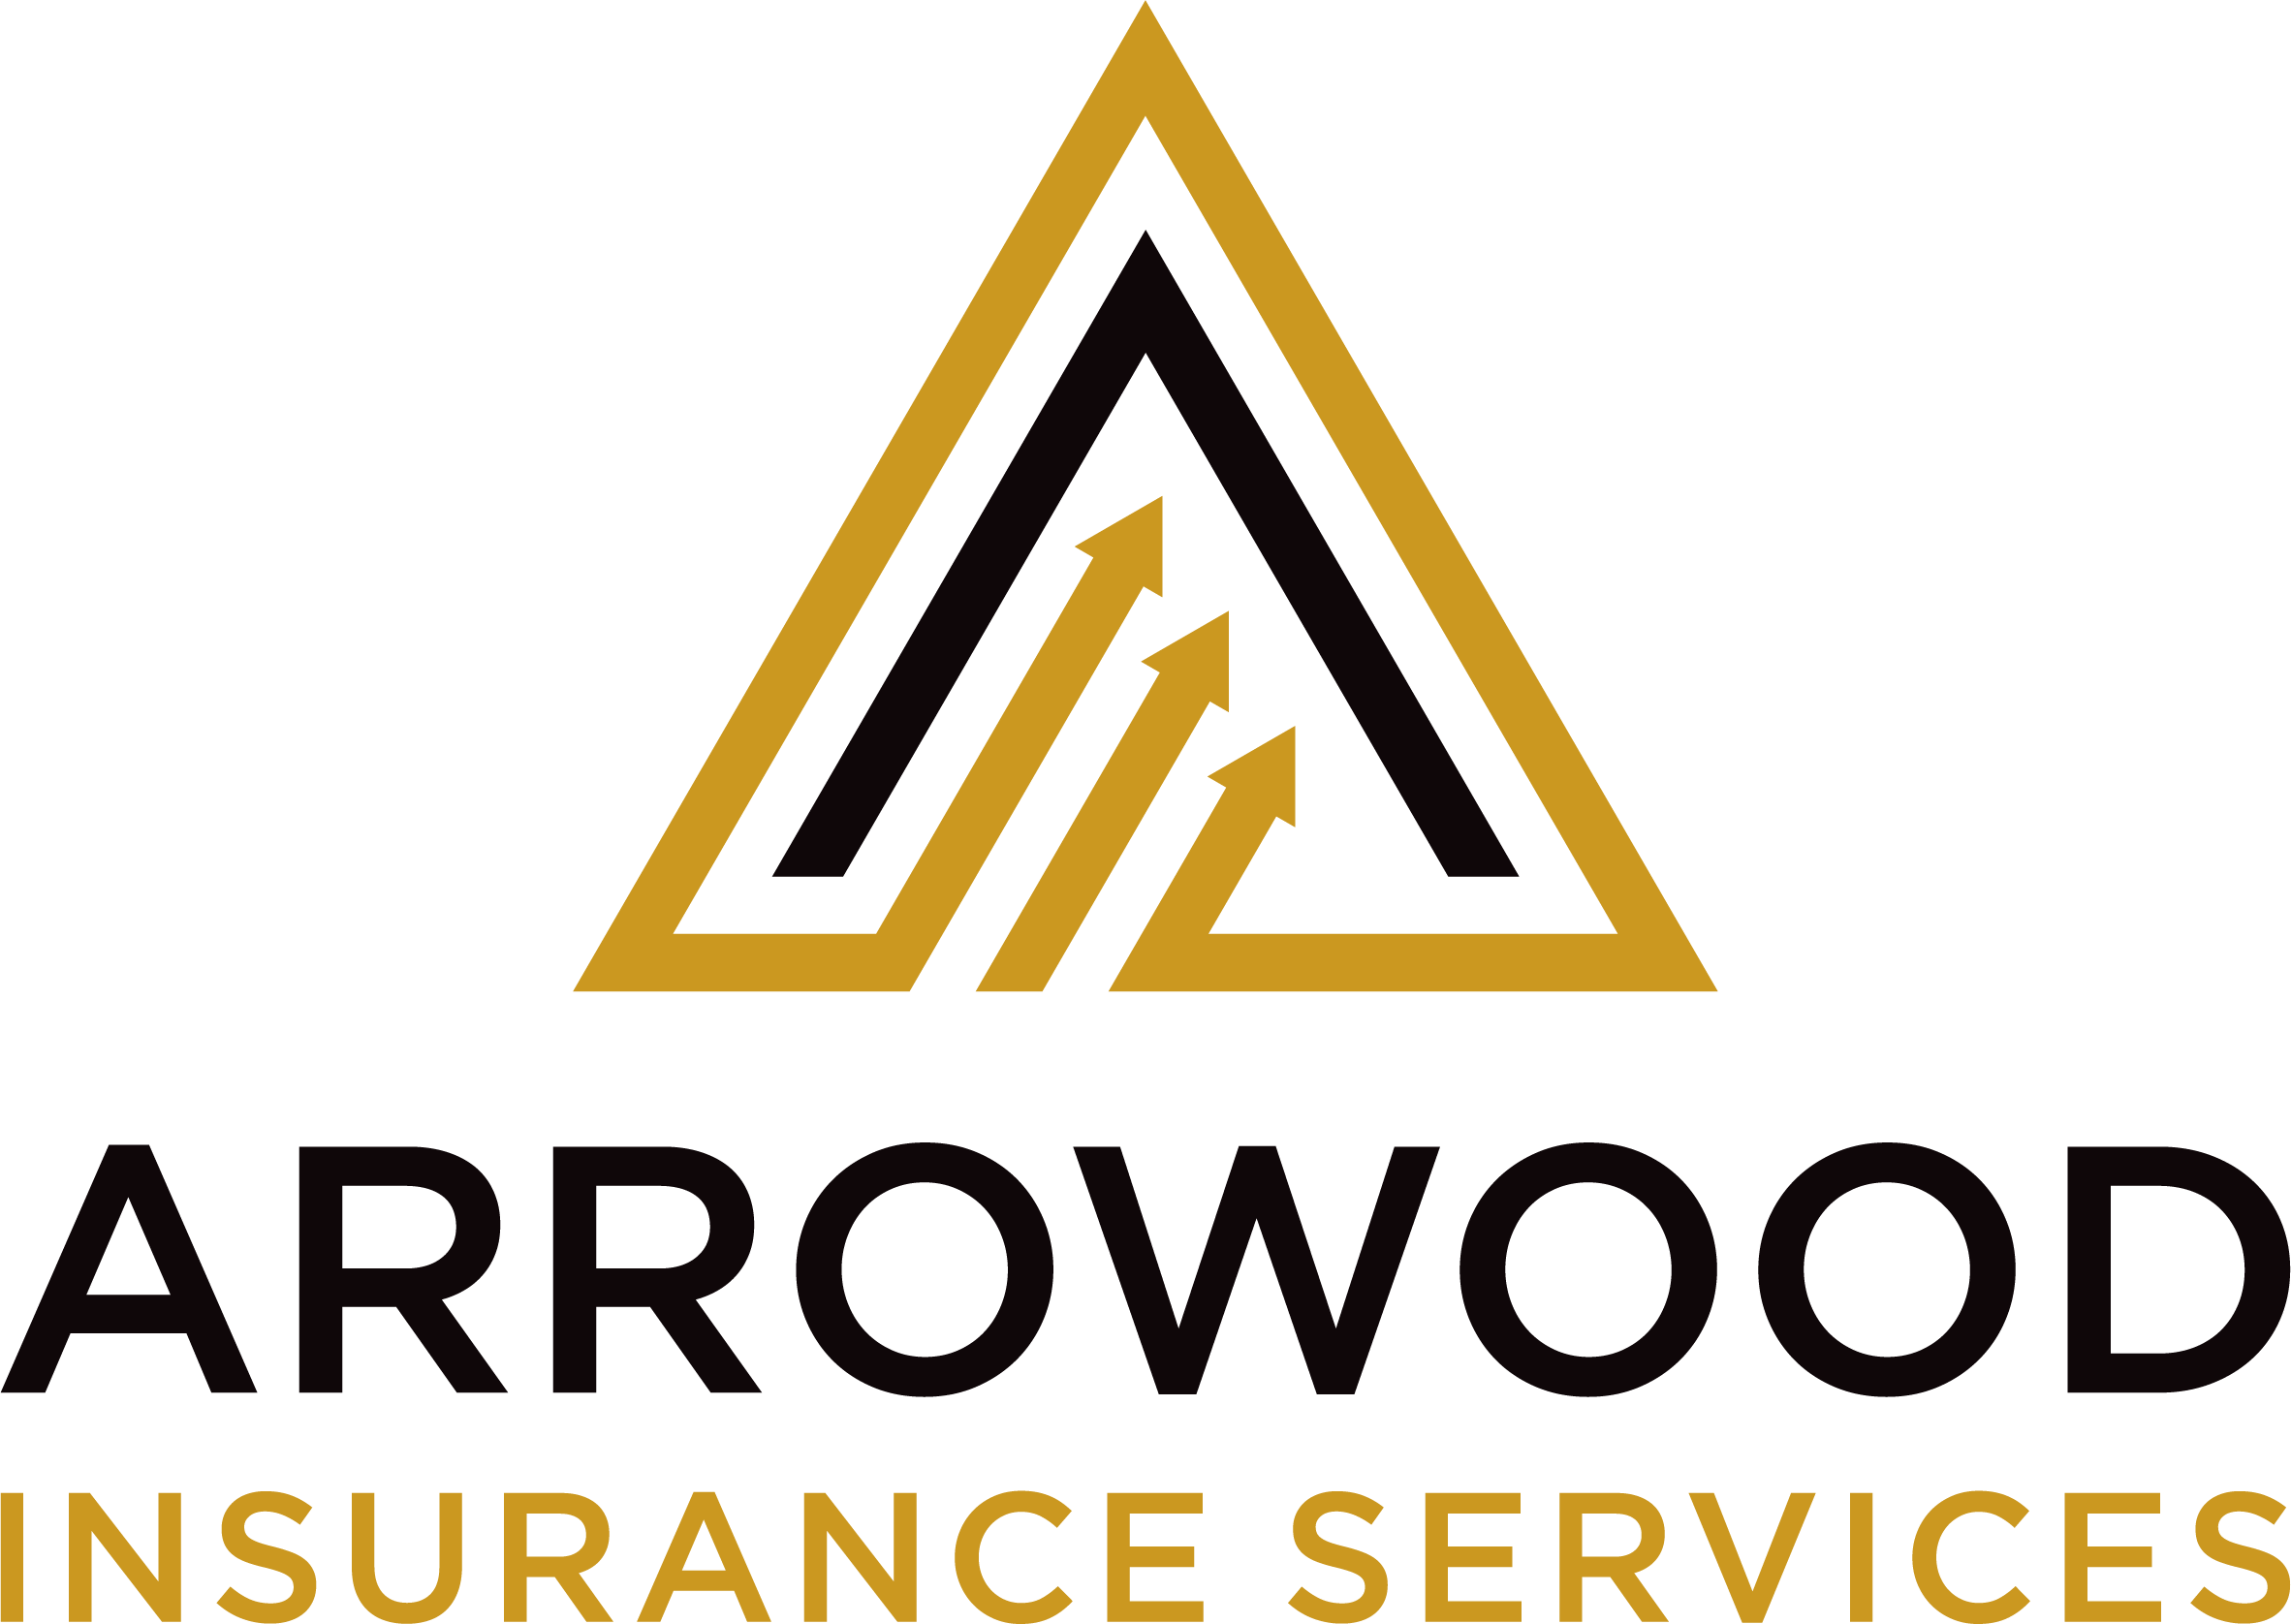 Arrowood Insurance Services